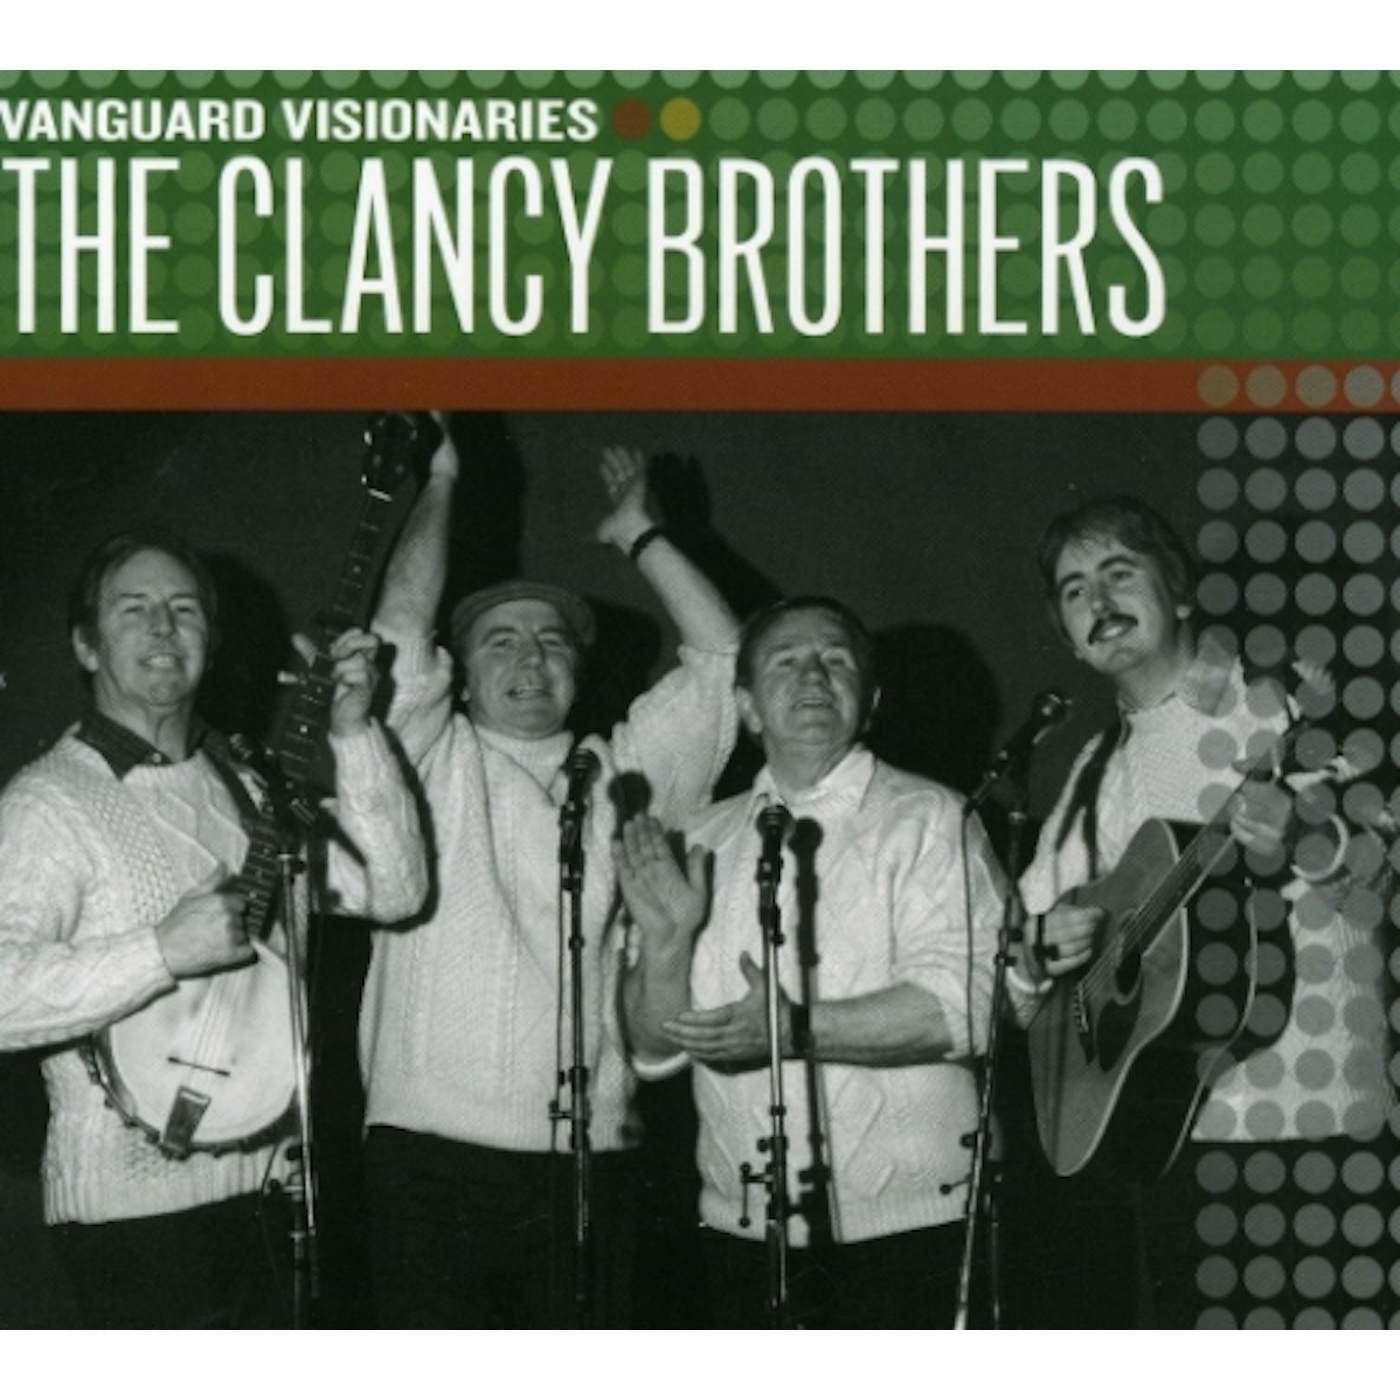 The Clancy Brothers VANGUARD VISIONARIES CD